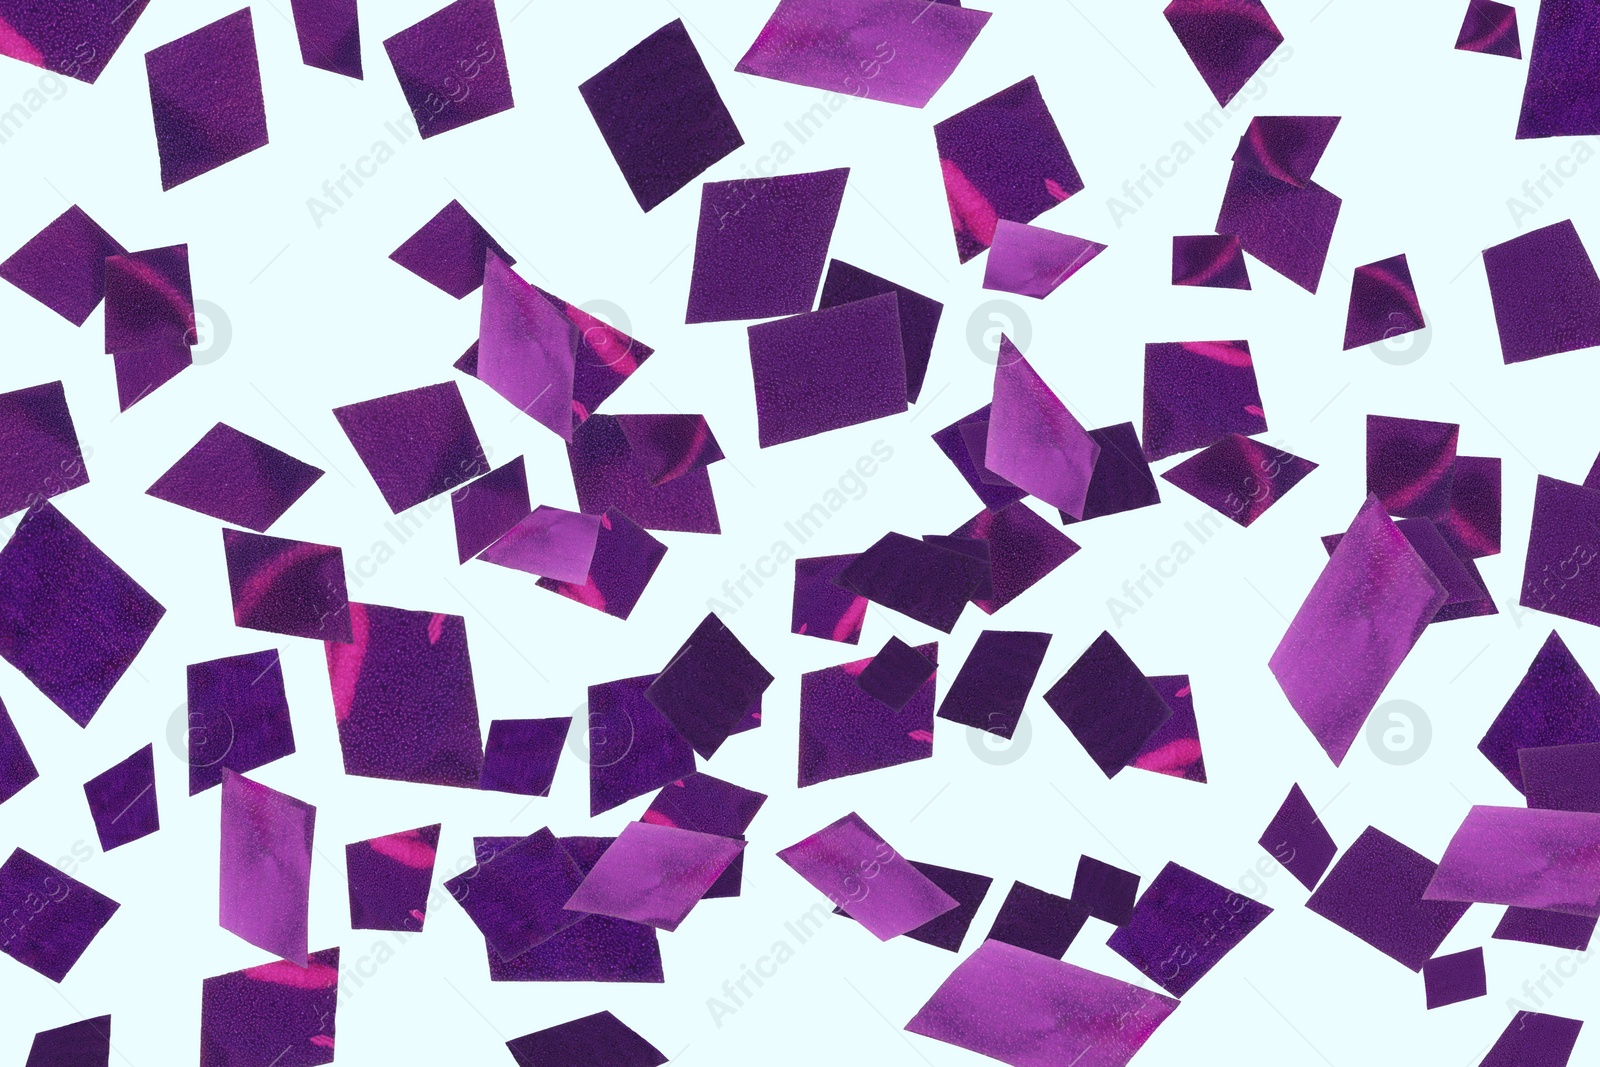 Image of Shiny purple confetti falling on light blue background